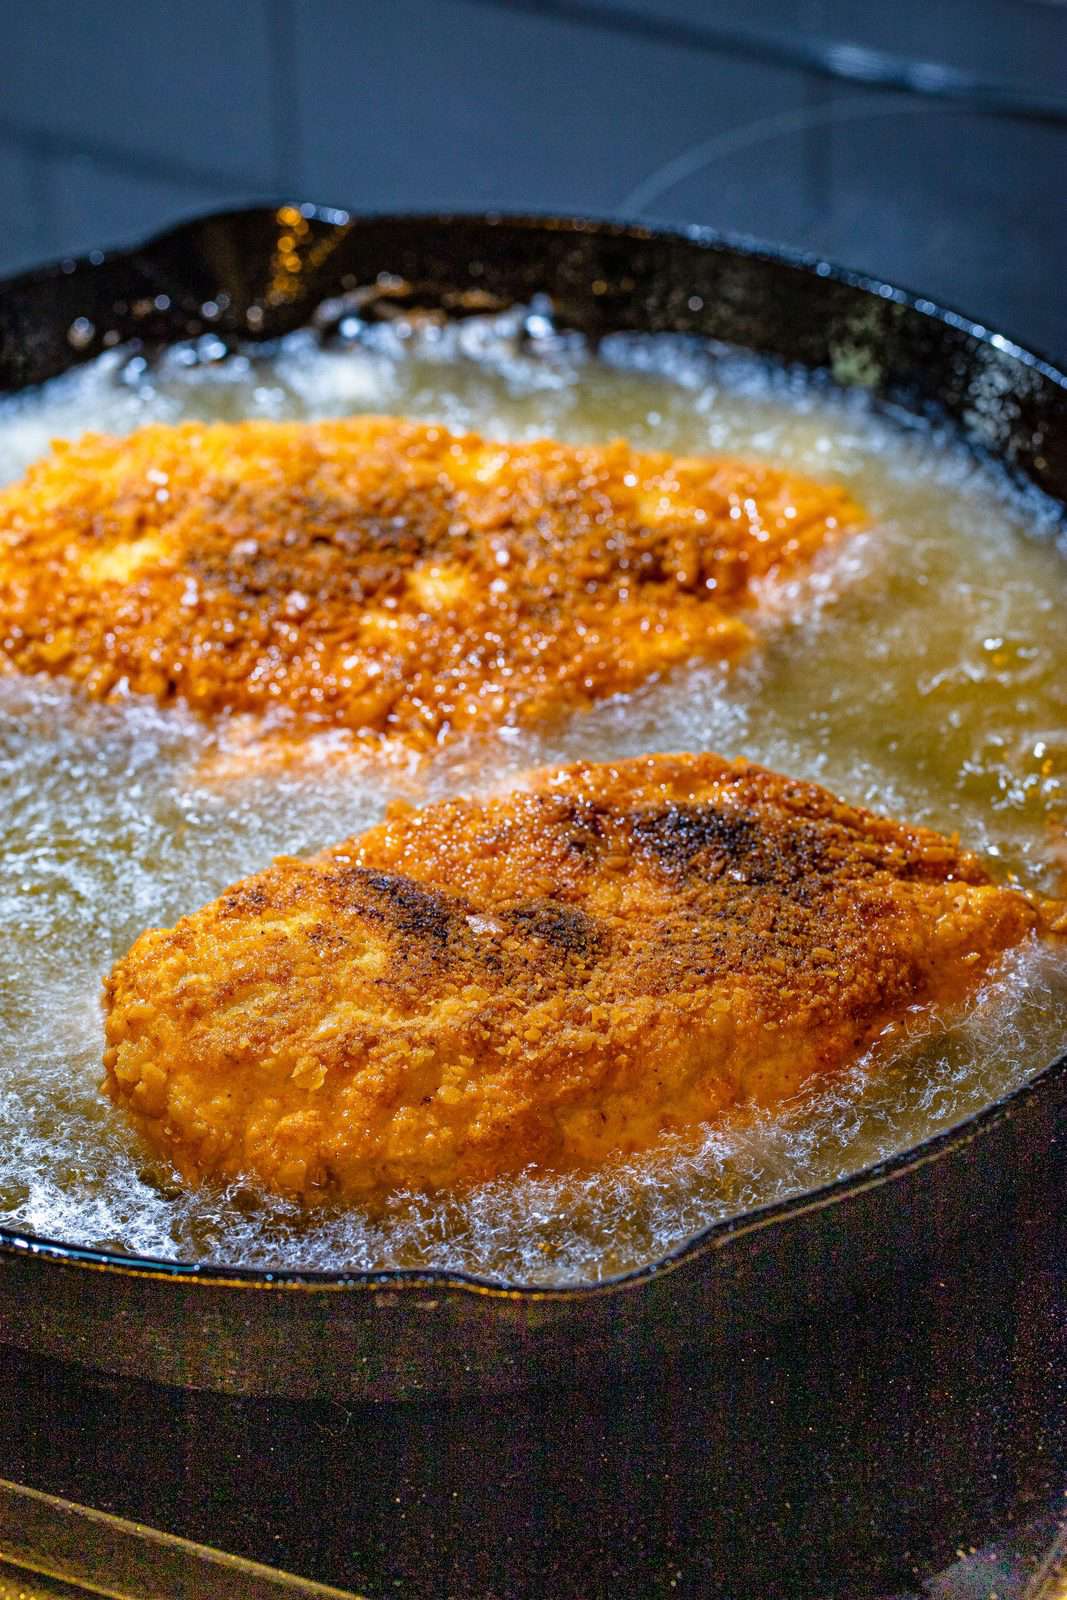 Chicken being fried in oil.